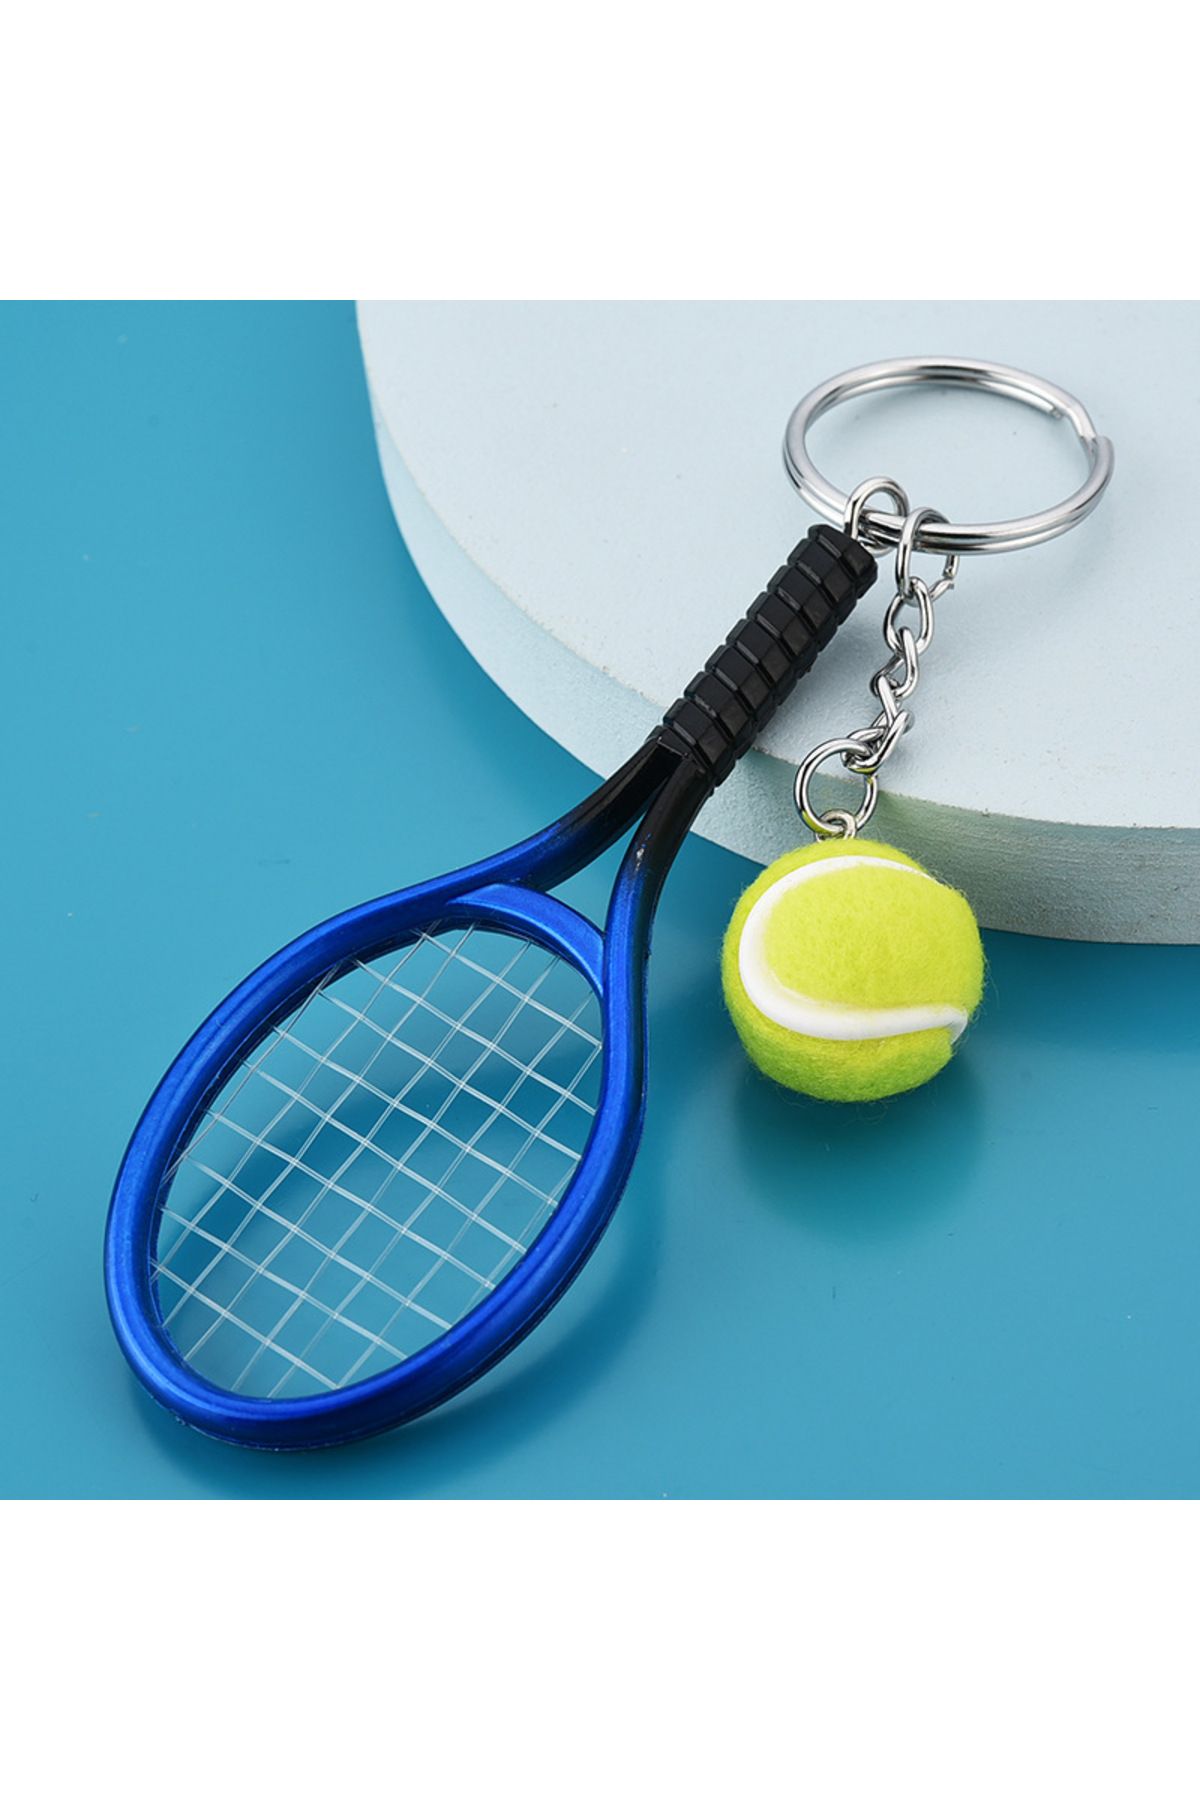 AYCANSTORE Tenis Raketi ve Tenis Topu Anahtarlık (Mavi)